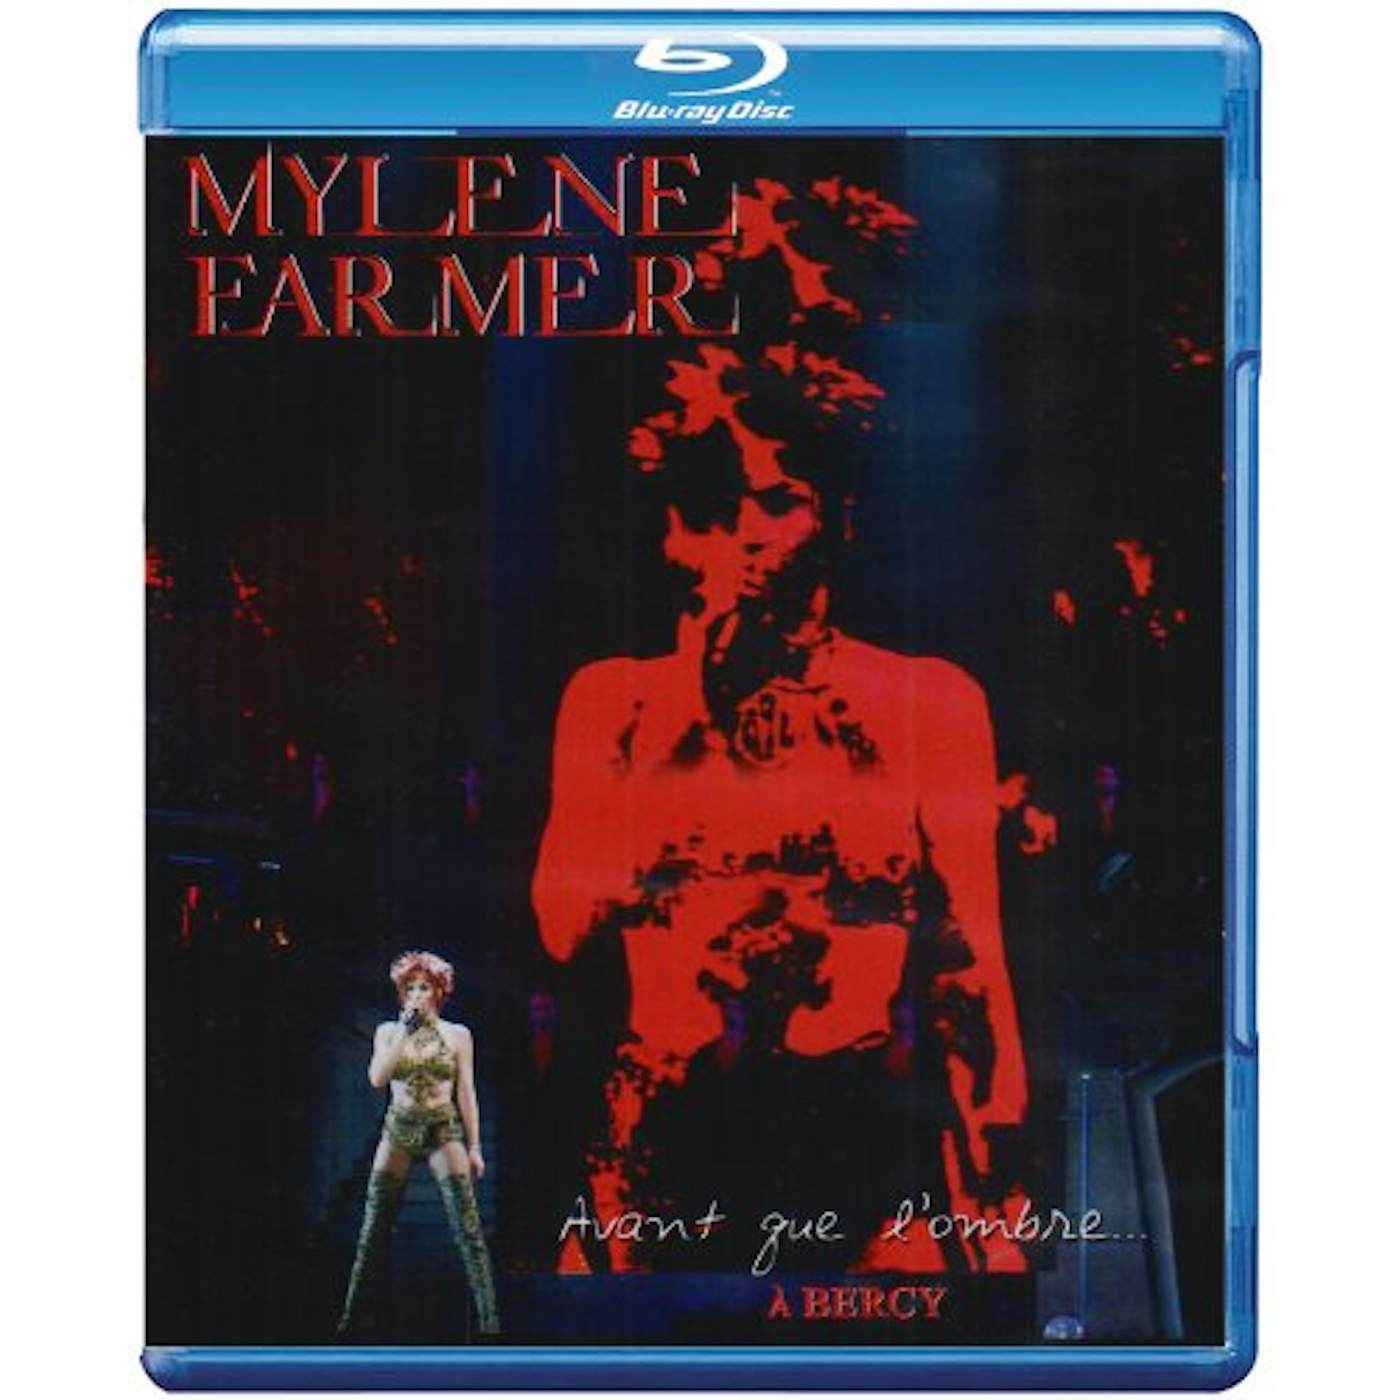 Mylène Farmer AVANT QUE L'OMBRE Blu-ray